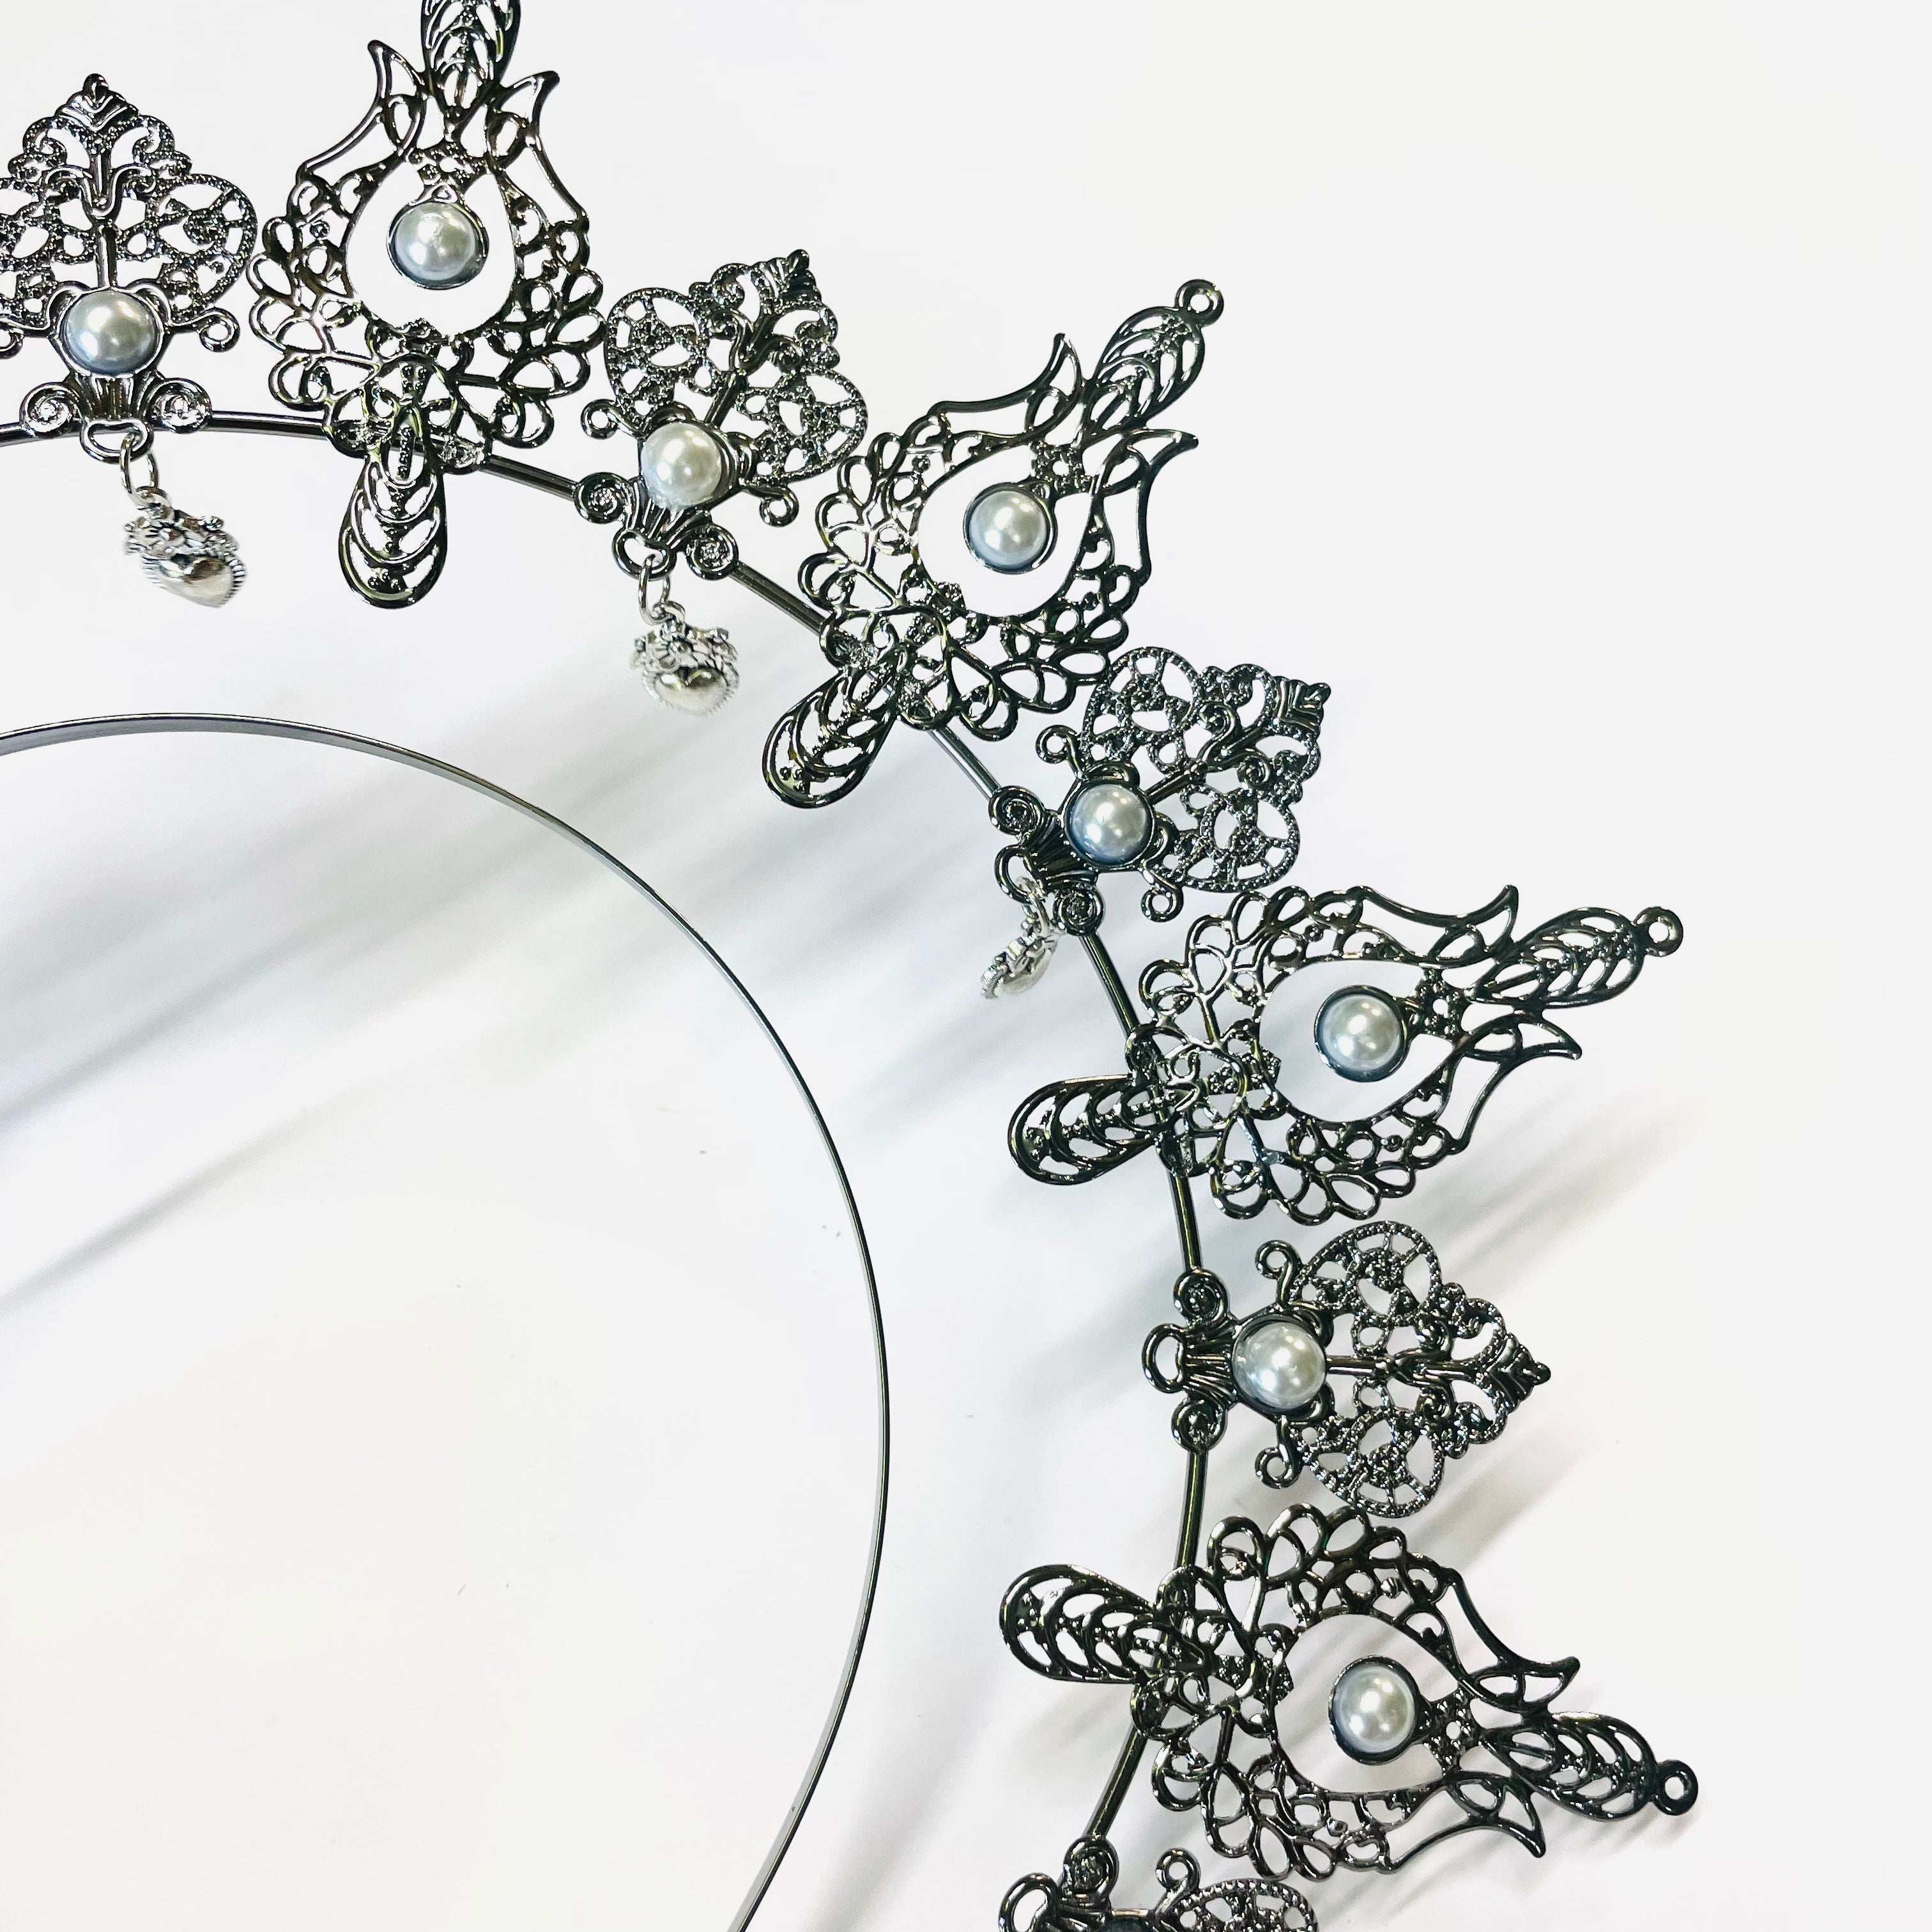 Gothic Goddess Spiked Halo Crown Festival Headdress Headband - Silver Style 3